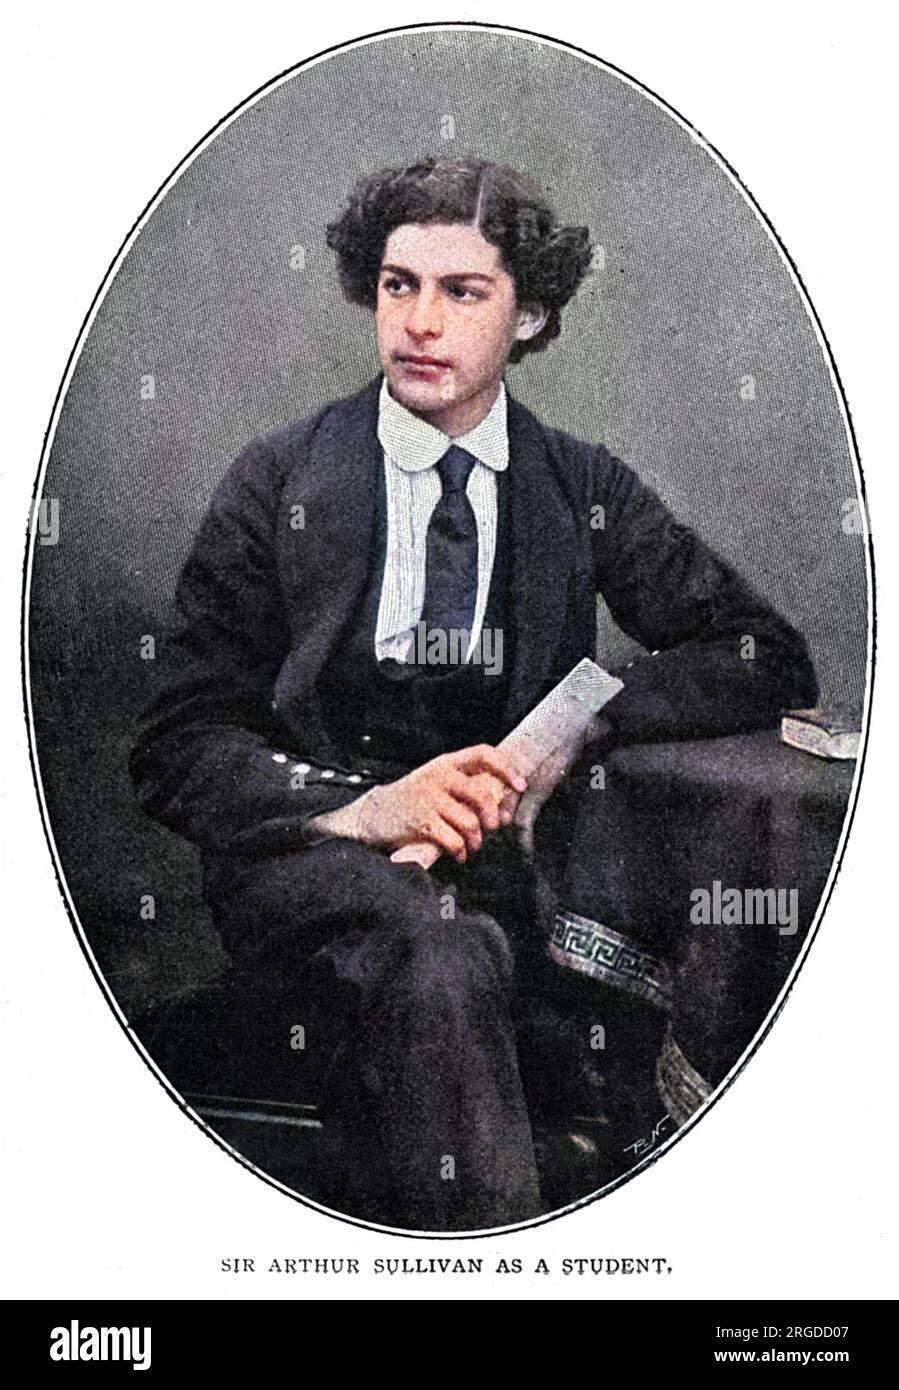 SIR ARTHUR SULLIVAN Musiker, assoziiert mit den Savoyer Opern, produziert mit W S Gilbert : fotografiert als Student. Stockfoto